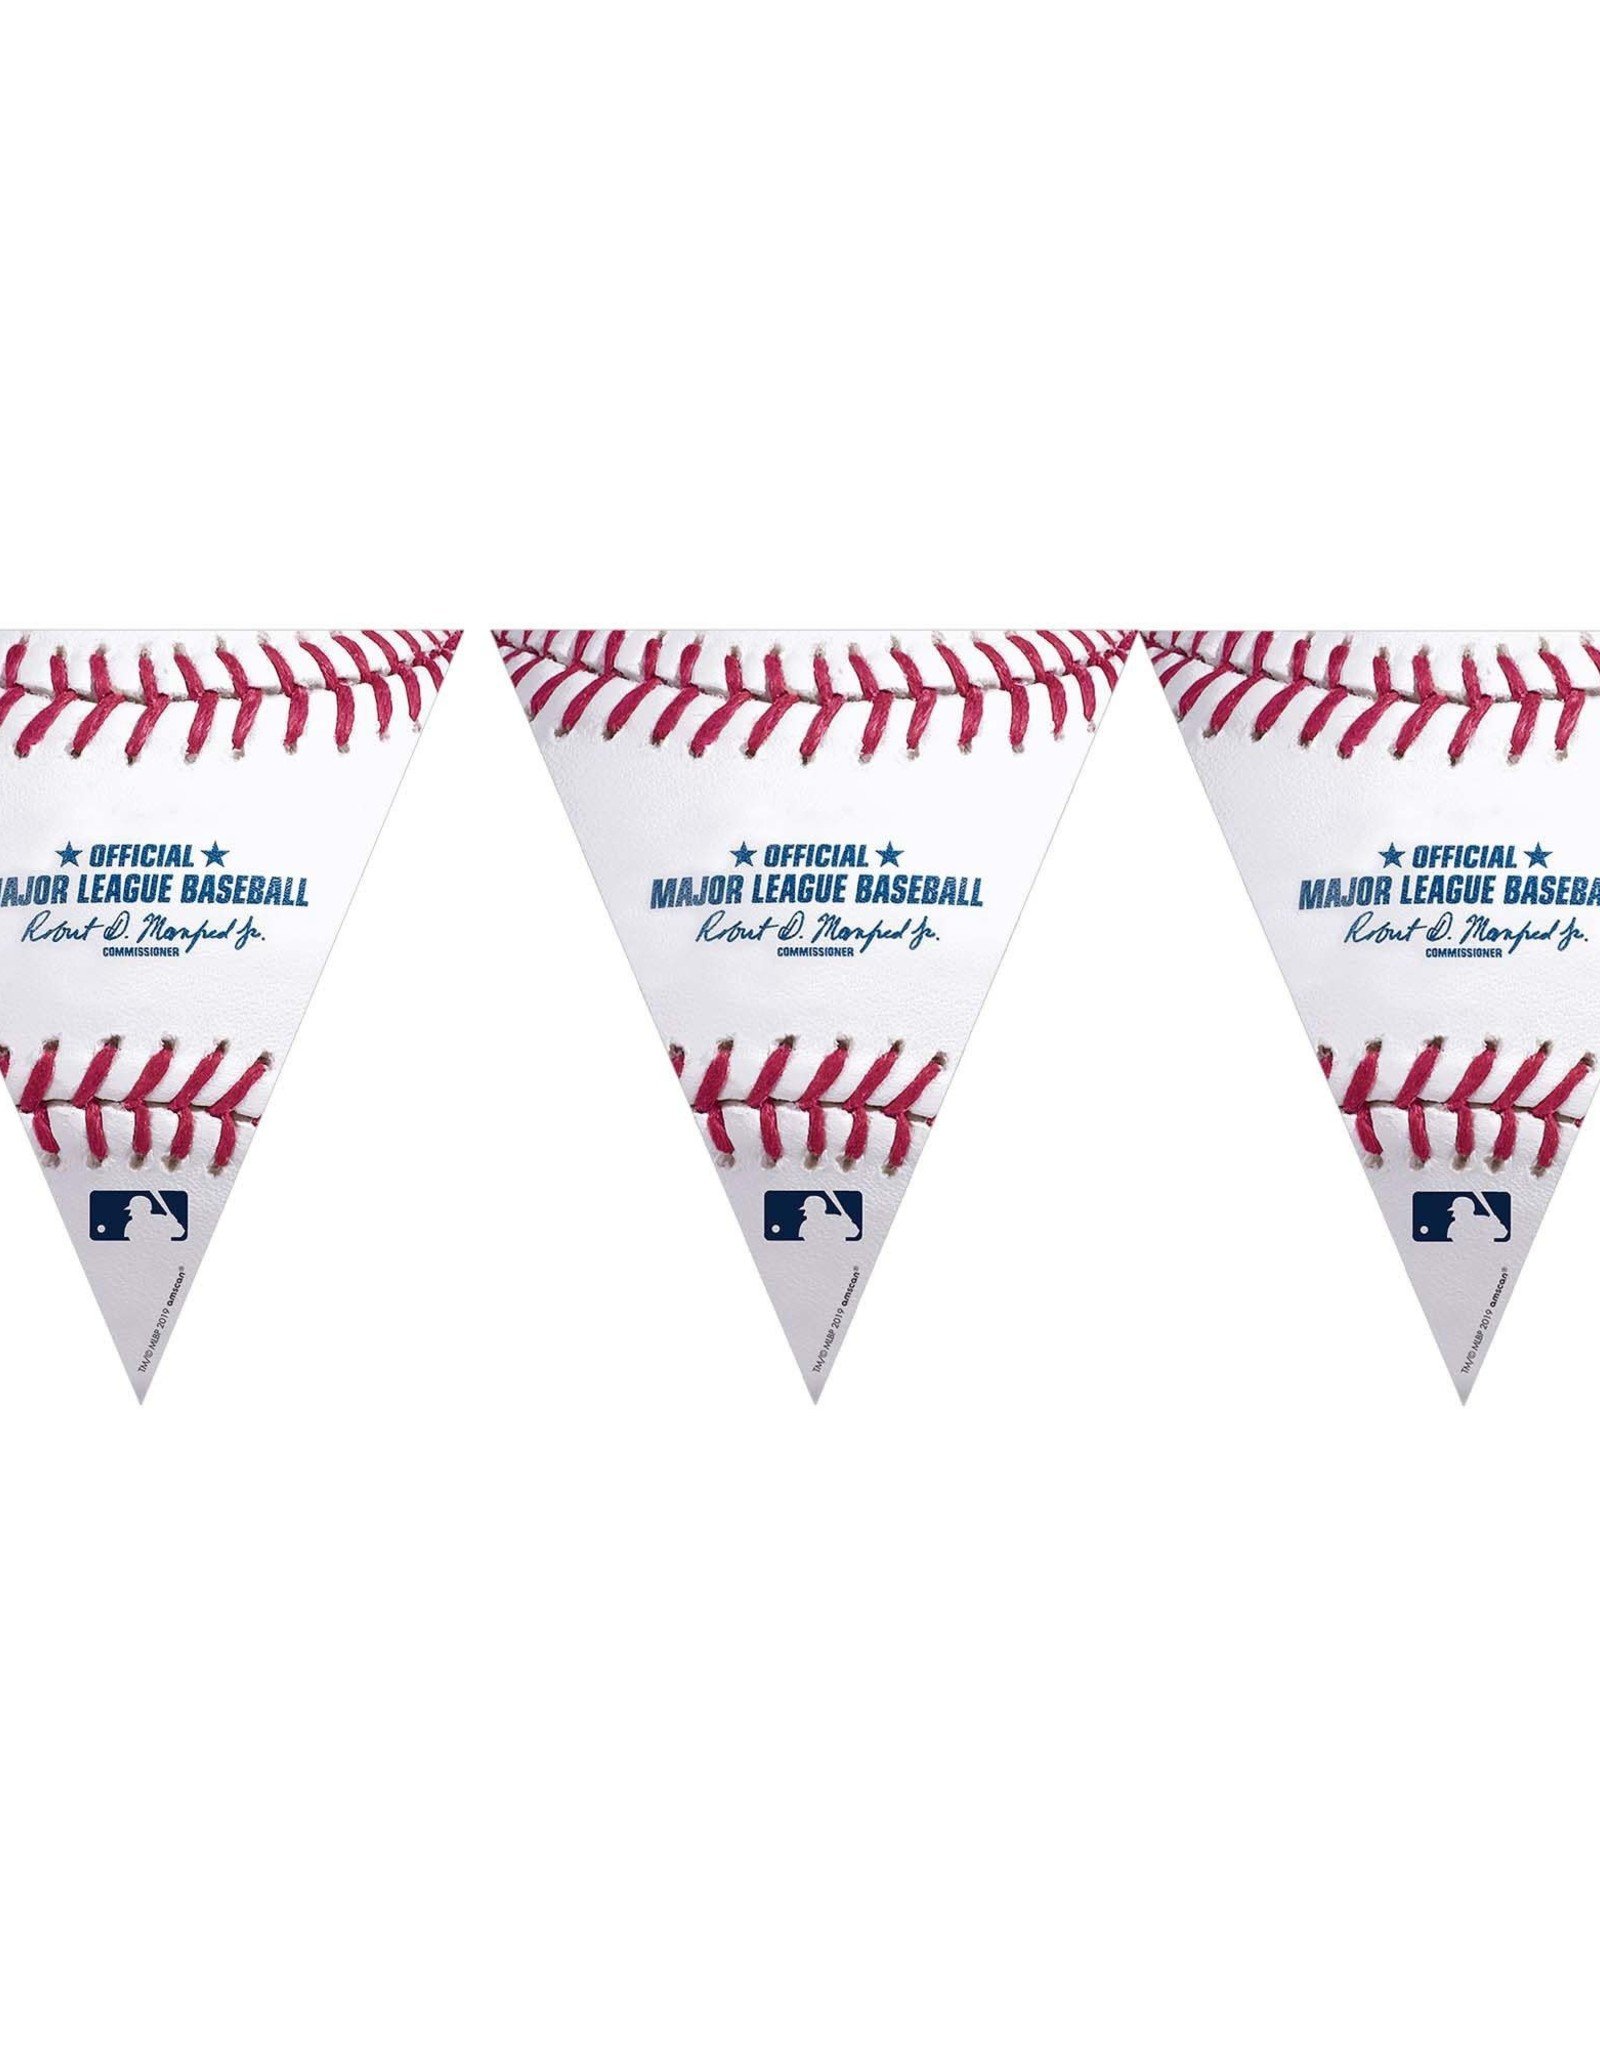 NY METS OPENING DAY PIN 2023 FLAG BANNER CITI FIELD MLB BASEBALL MIAMI  MARLINS  eBay